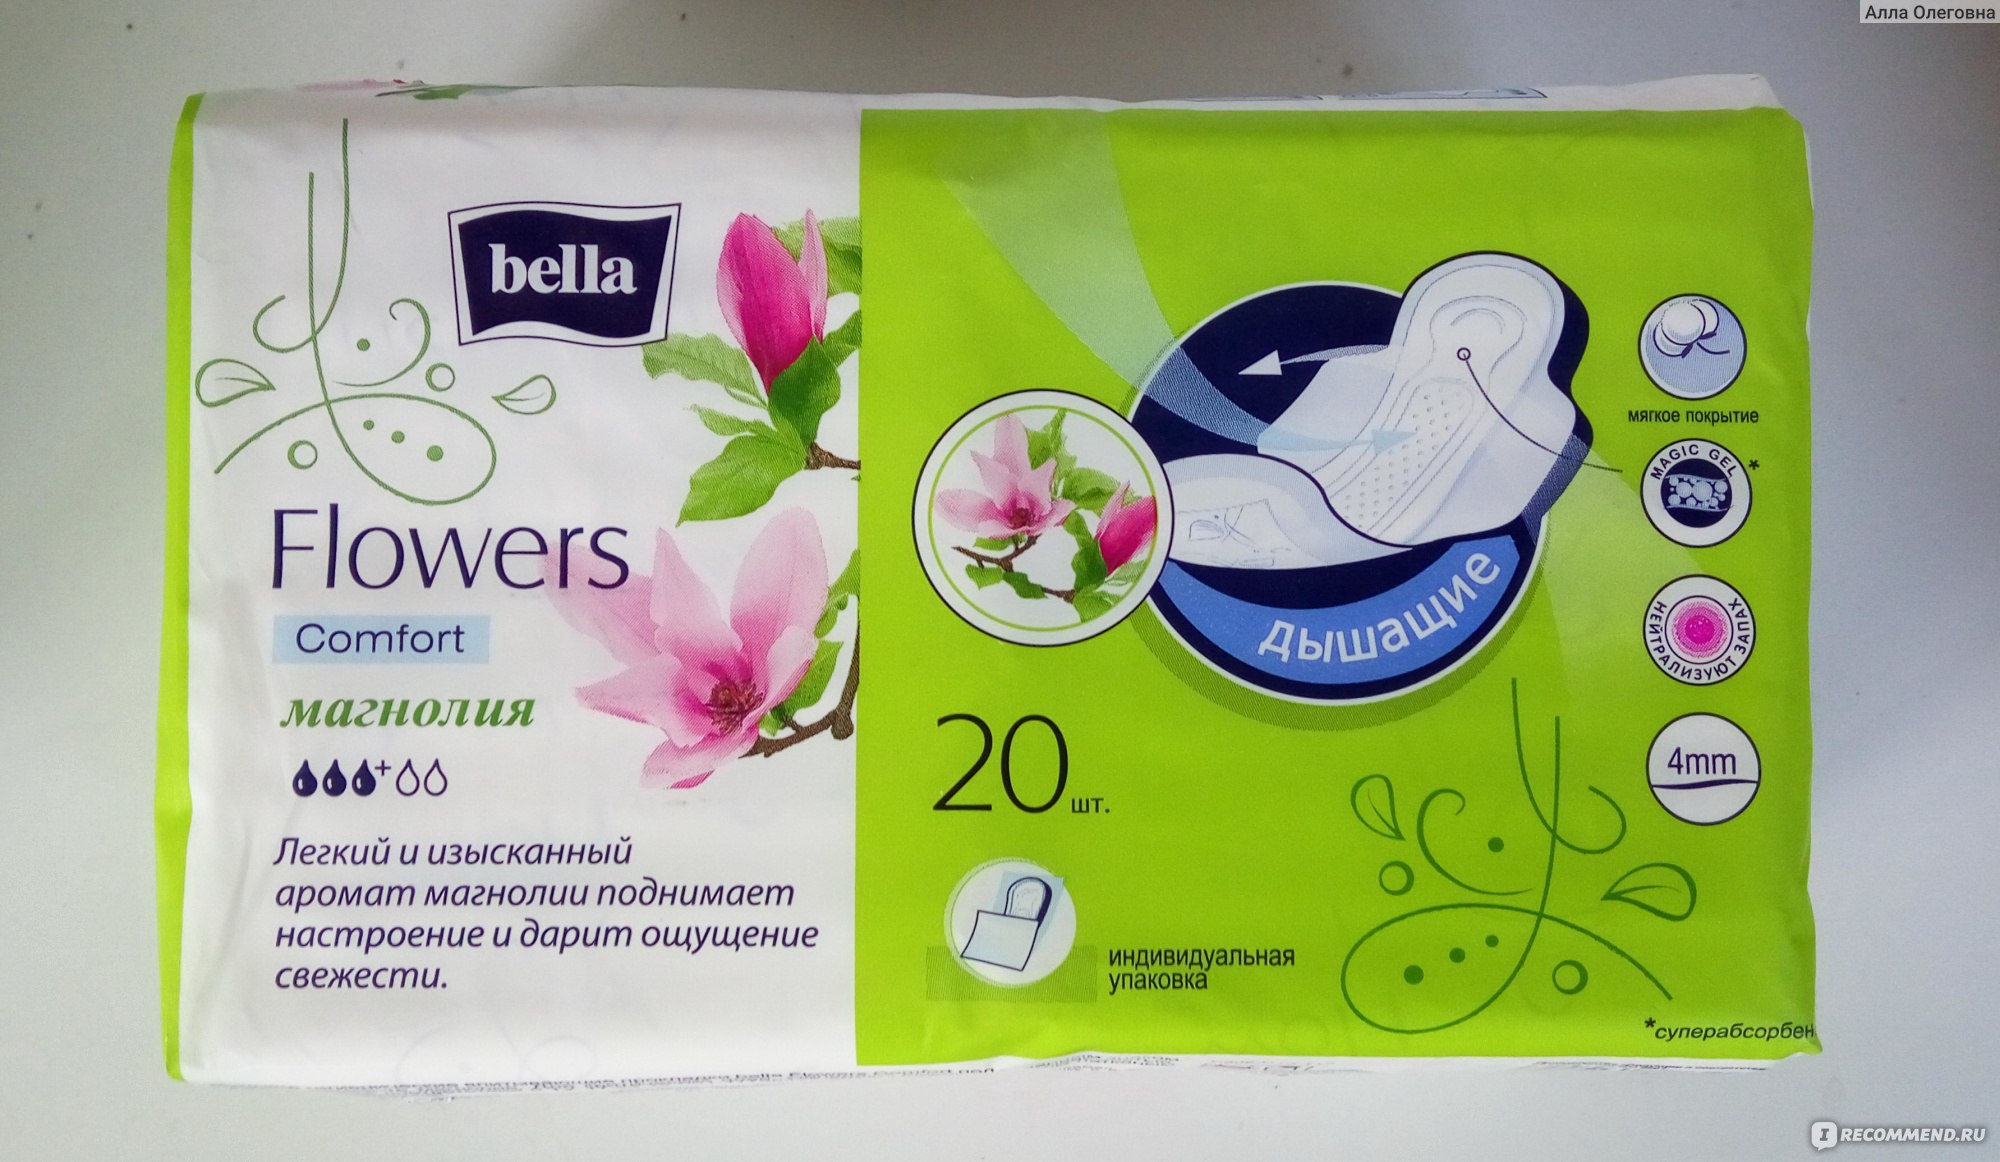 Bella forum. Прокладки Bella Flowers Магнолия. Прокладки Bella Flowers Comfort 20шт.